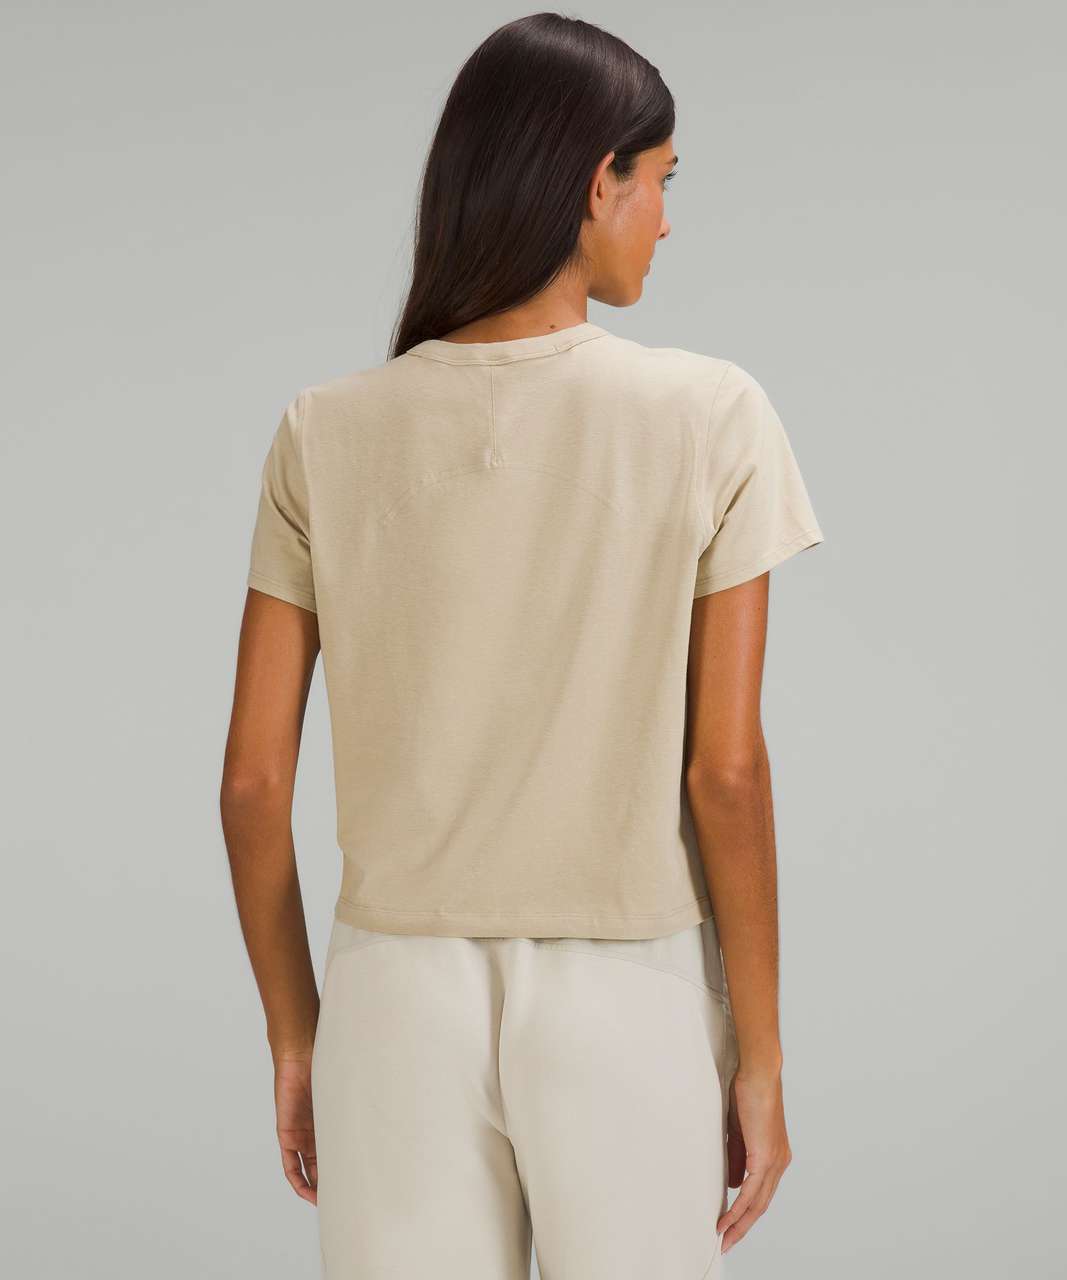 Lululemon Classic-Fit Cotton-Blend T-Shirt - Trench